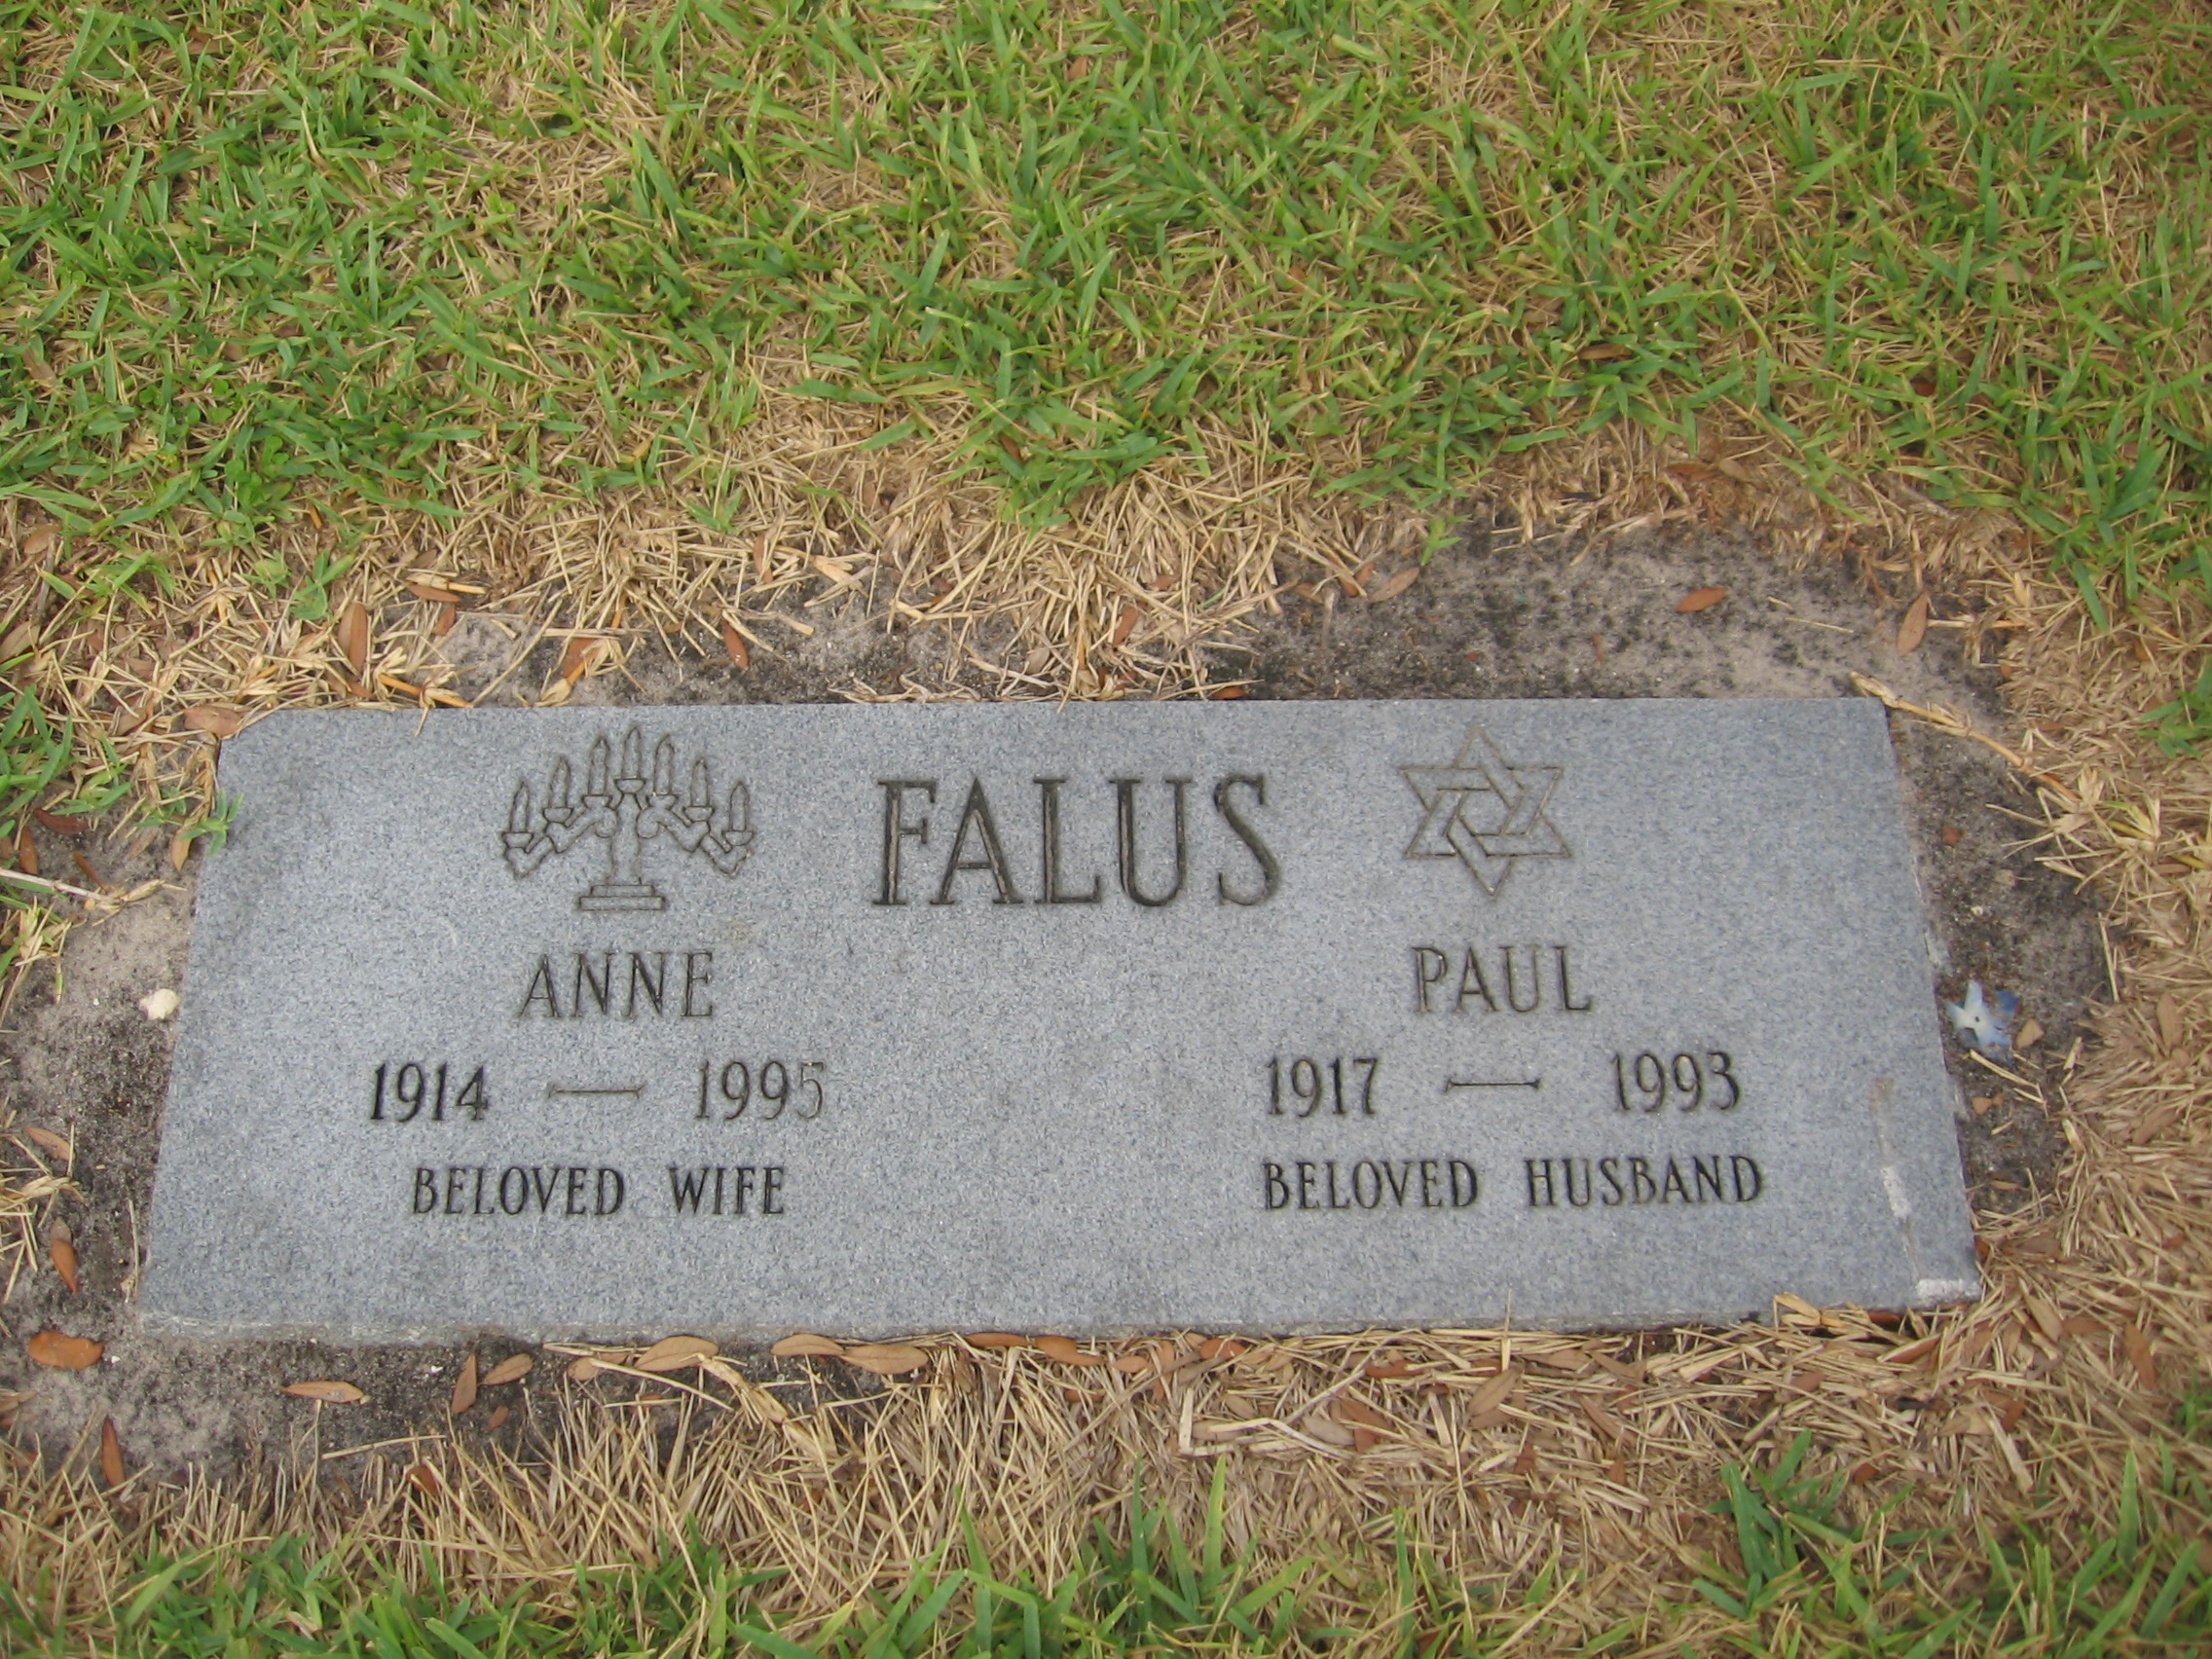 Anne Falus